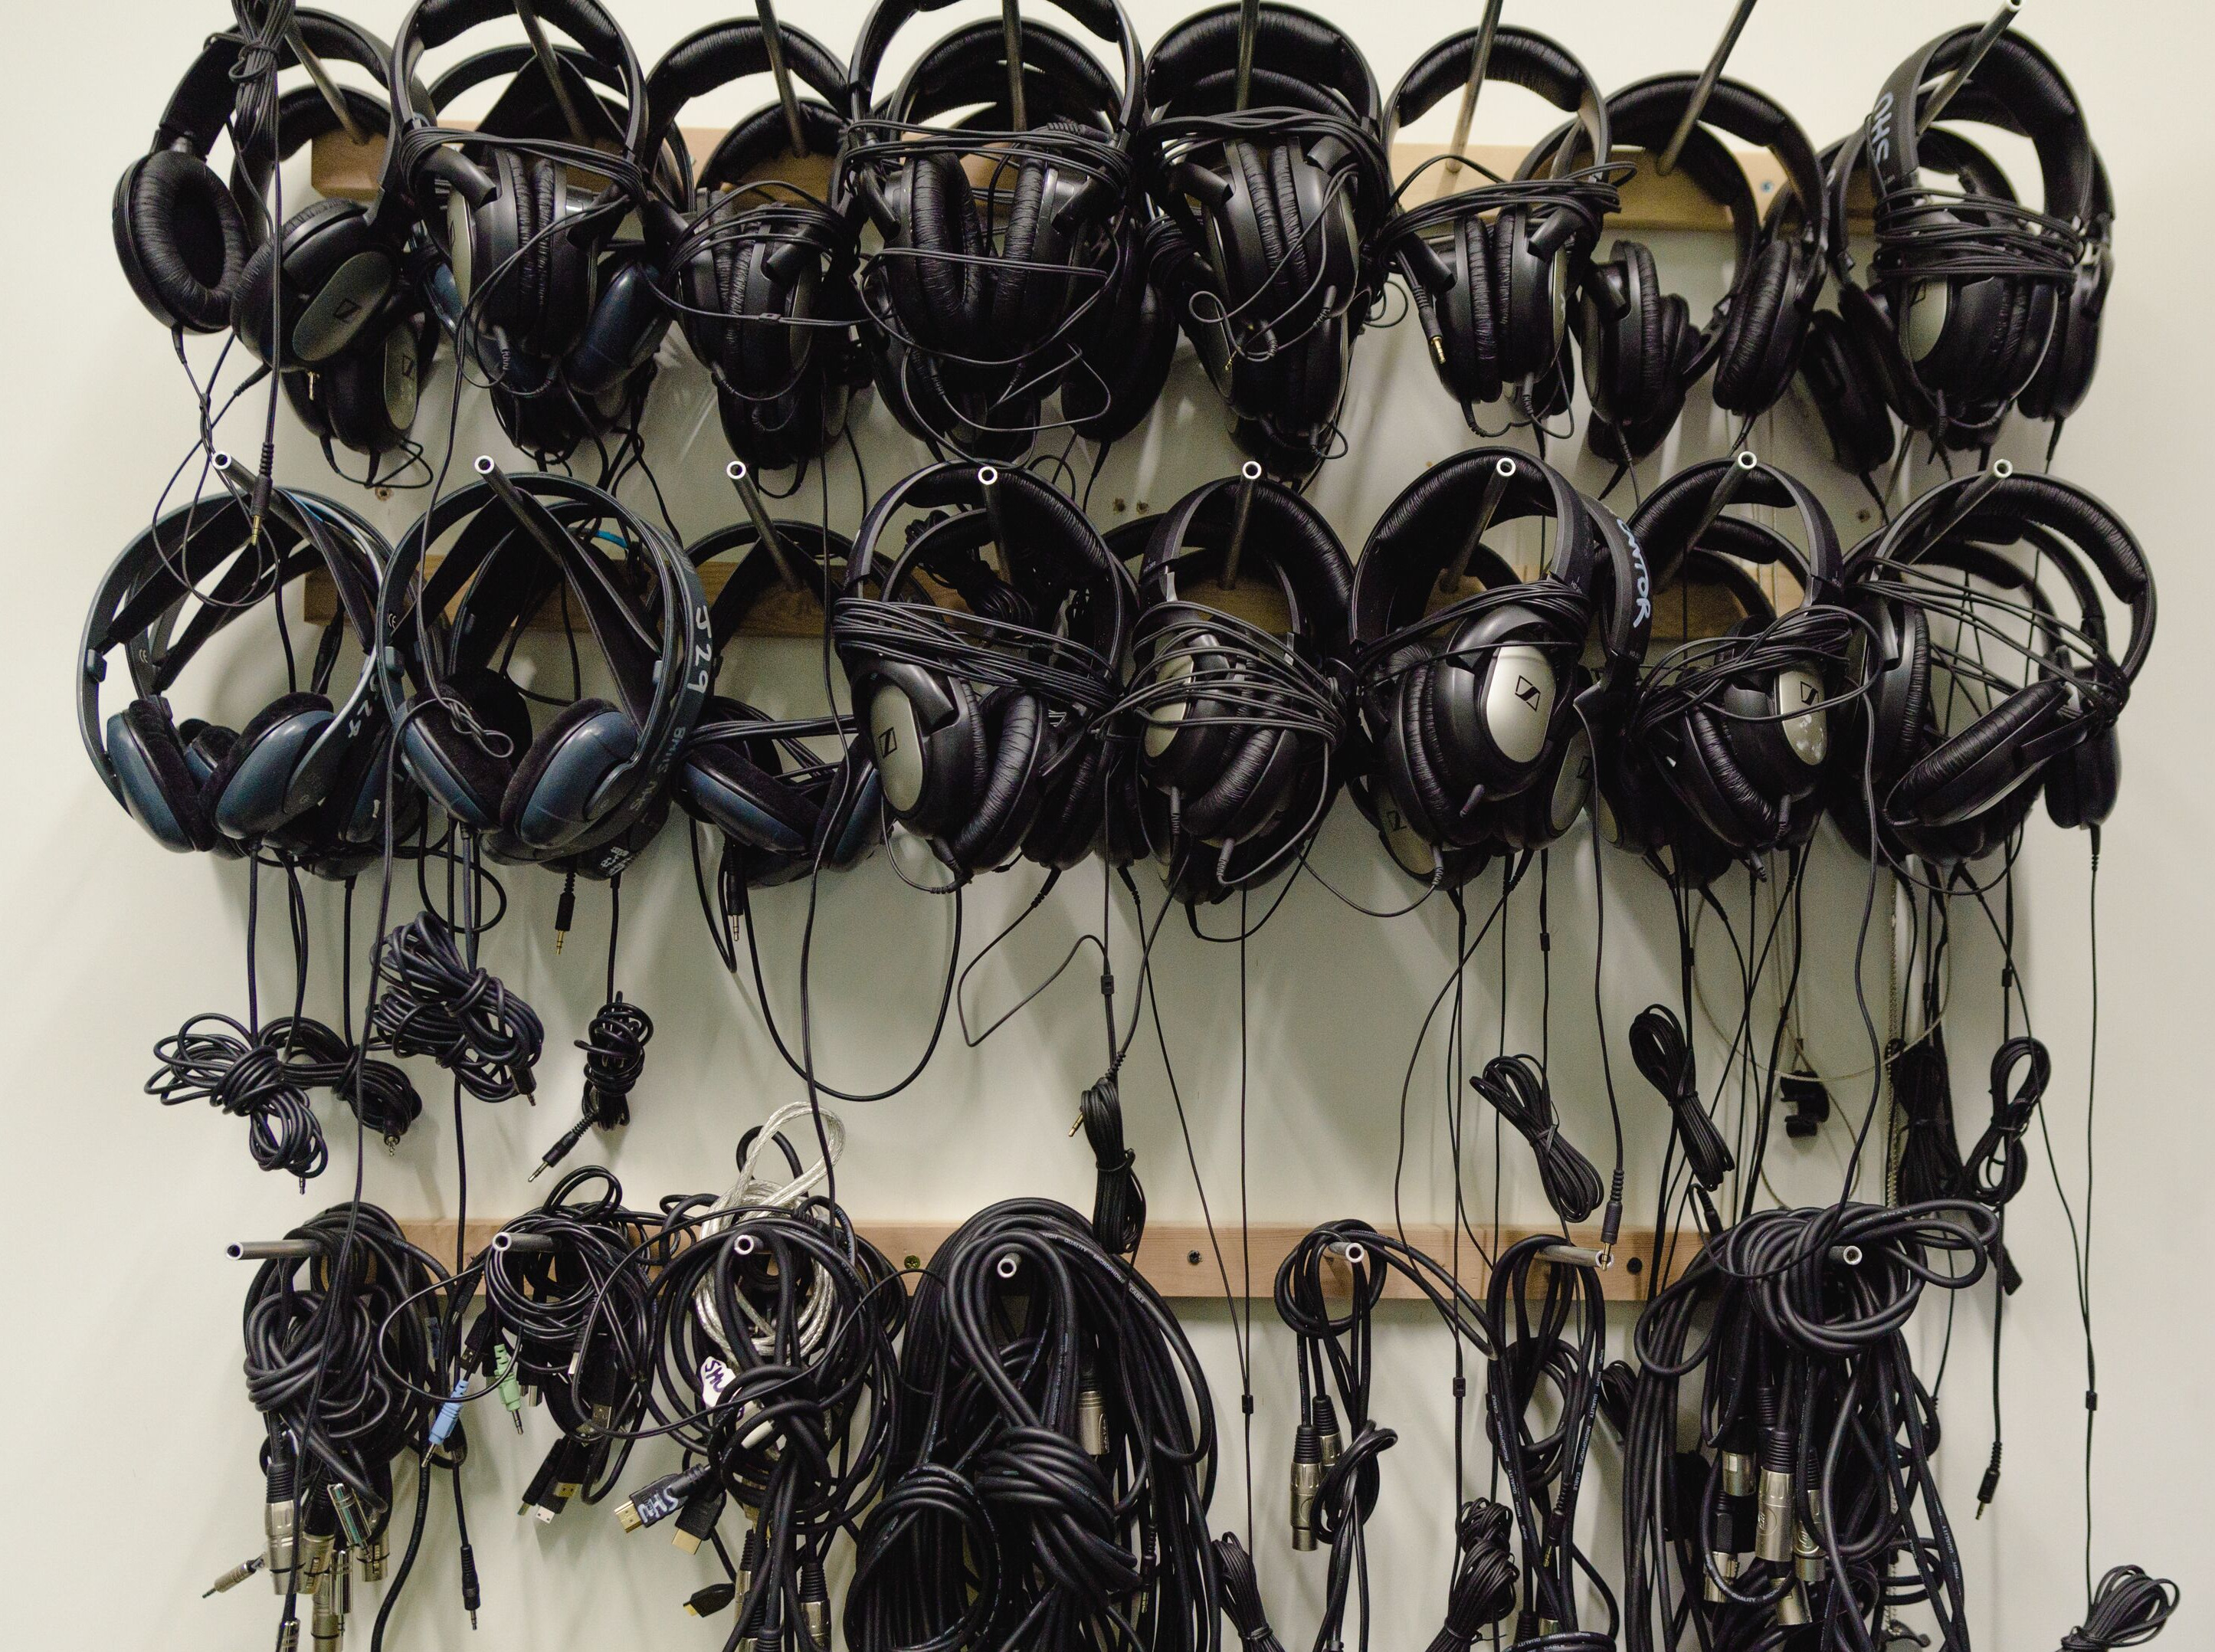 Black headphones on a wall